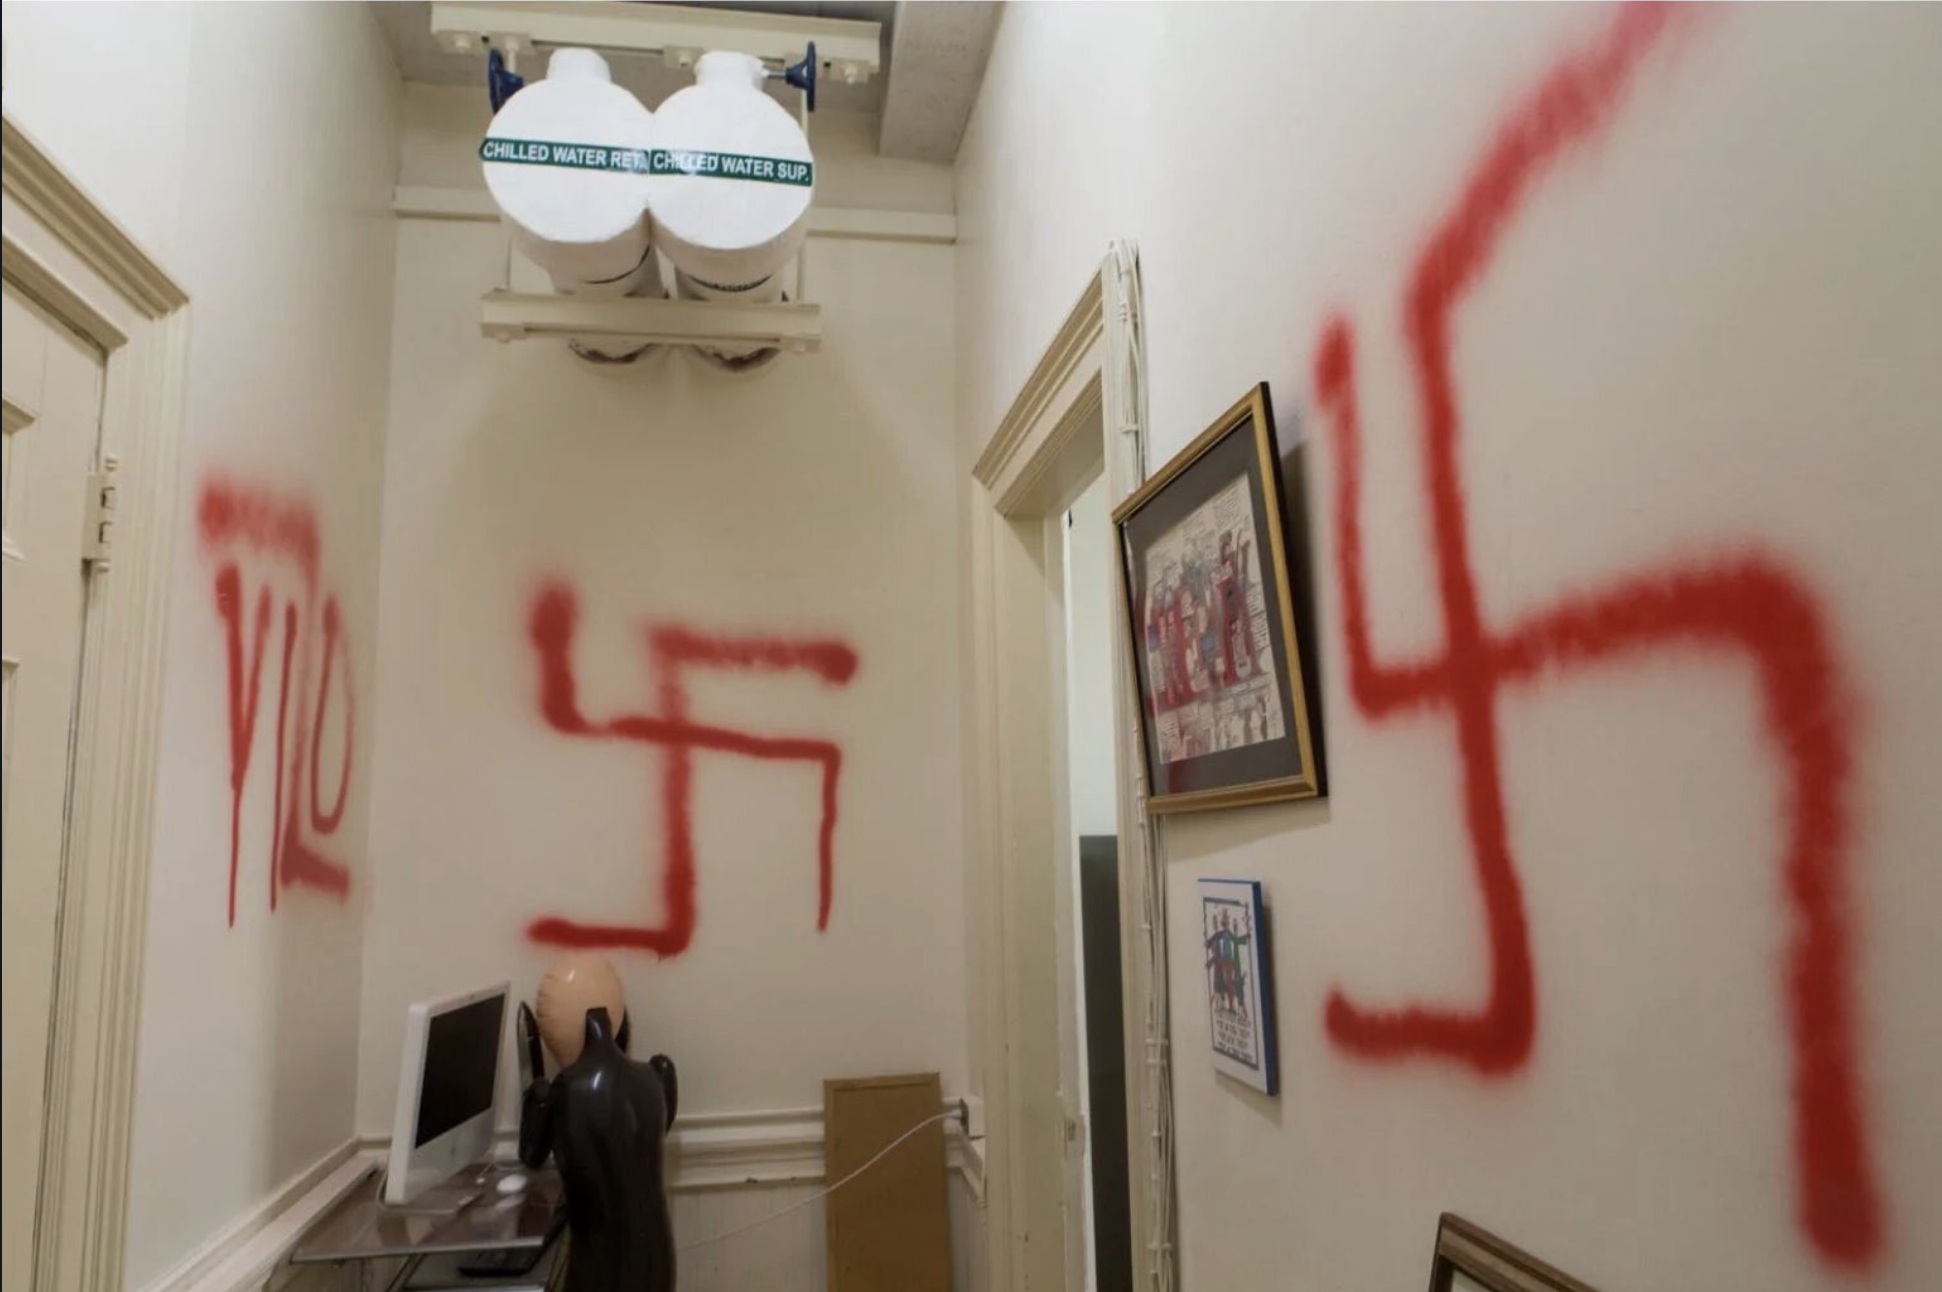 Columbia Professor’s Office Vandalized With Swastikas